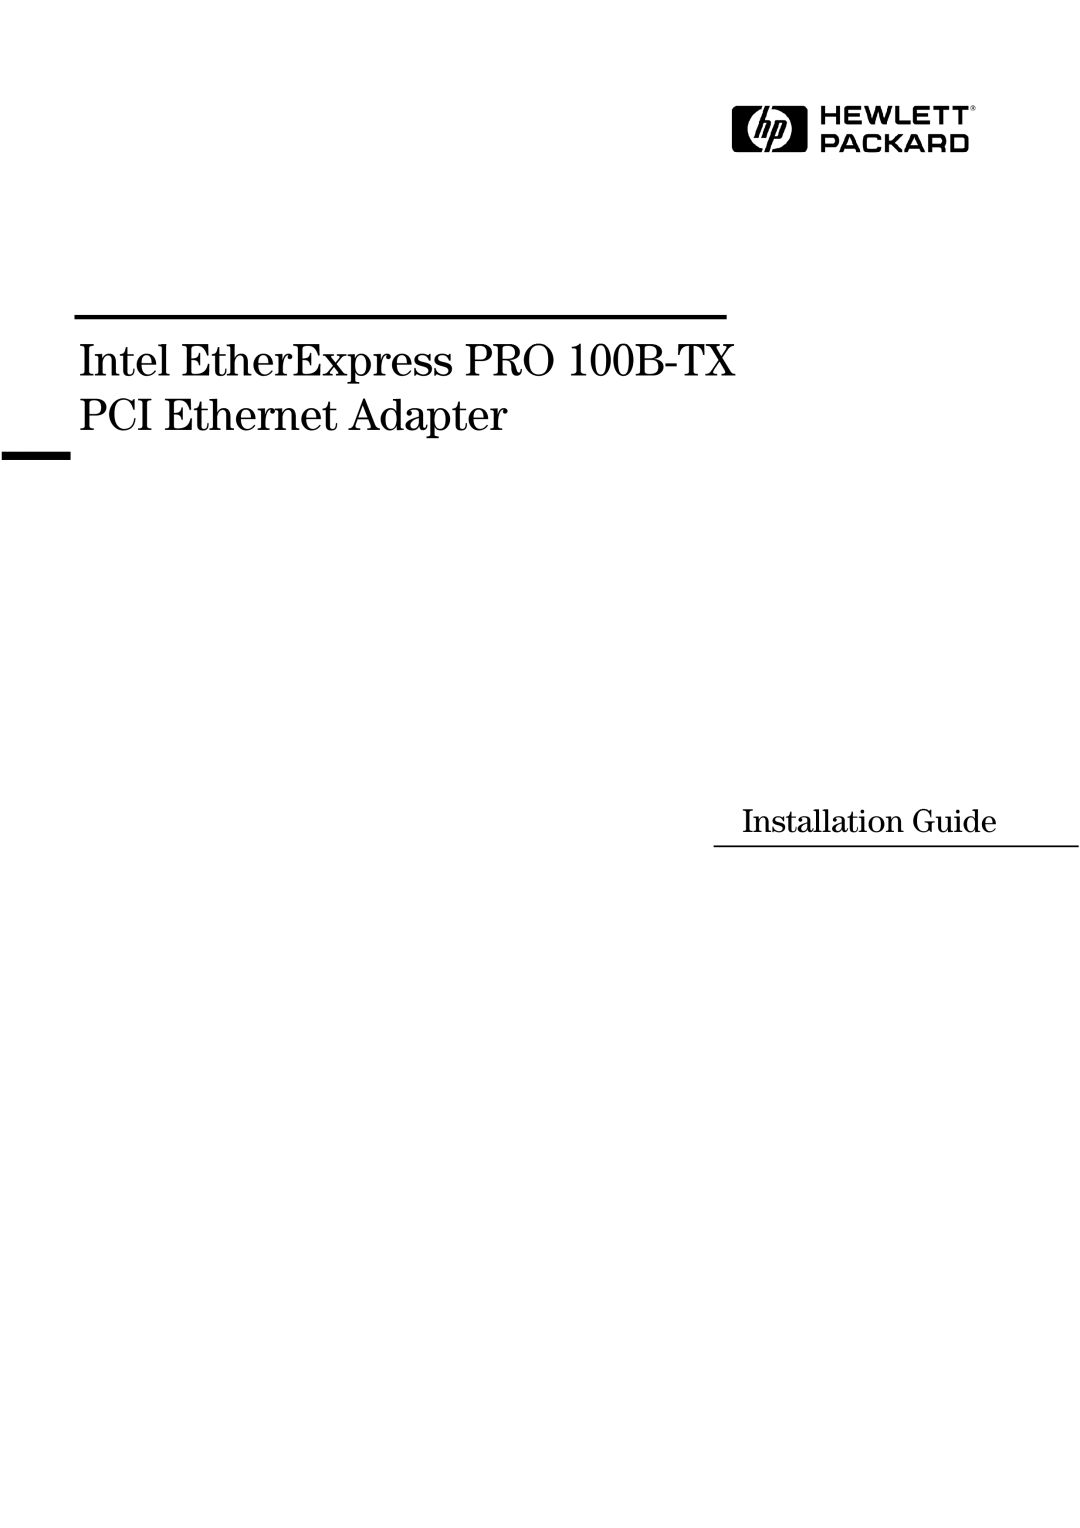 HP manual Intel EtherExpress PRO 100B-TX PCI Ethernet Adapter, Installation Guide 